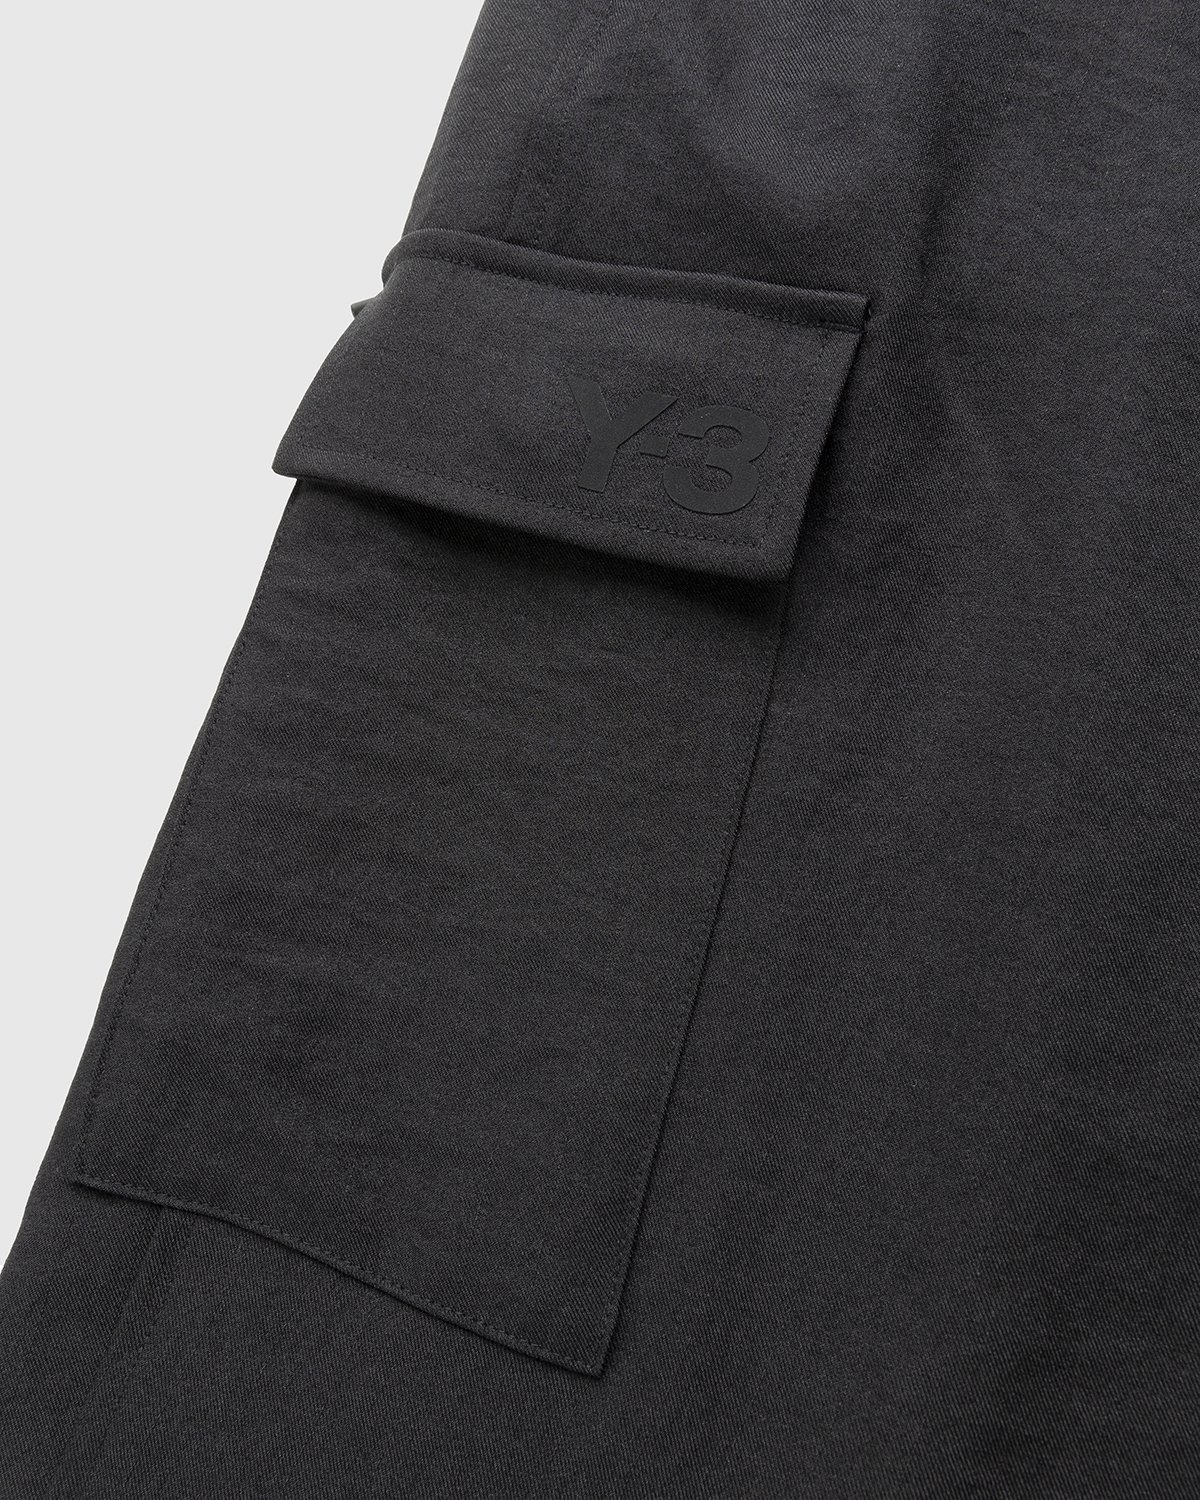 Y-3 - Classic Sport Uniform Cargo Pants Black - Clothing - Black - Image 5